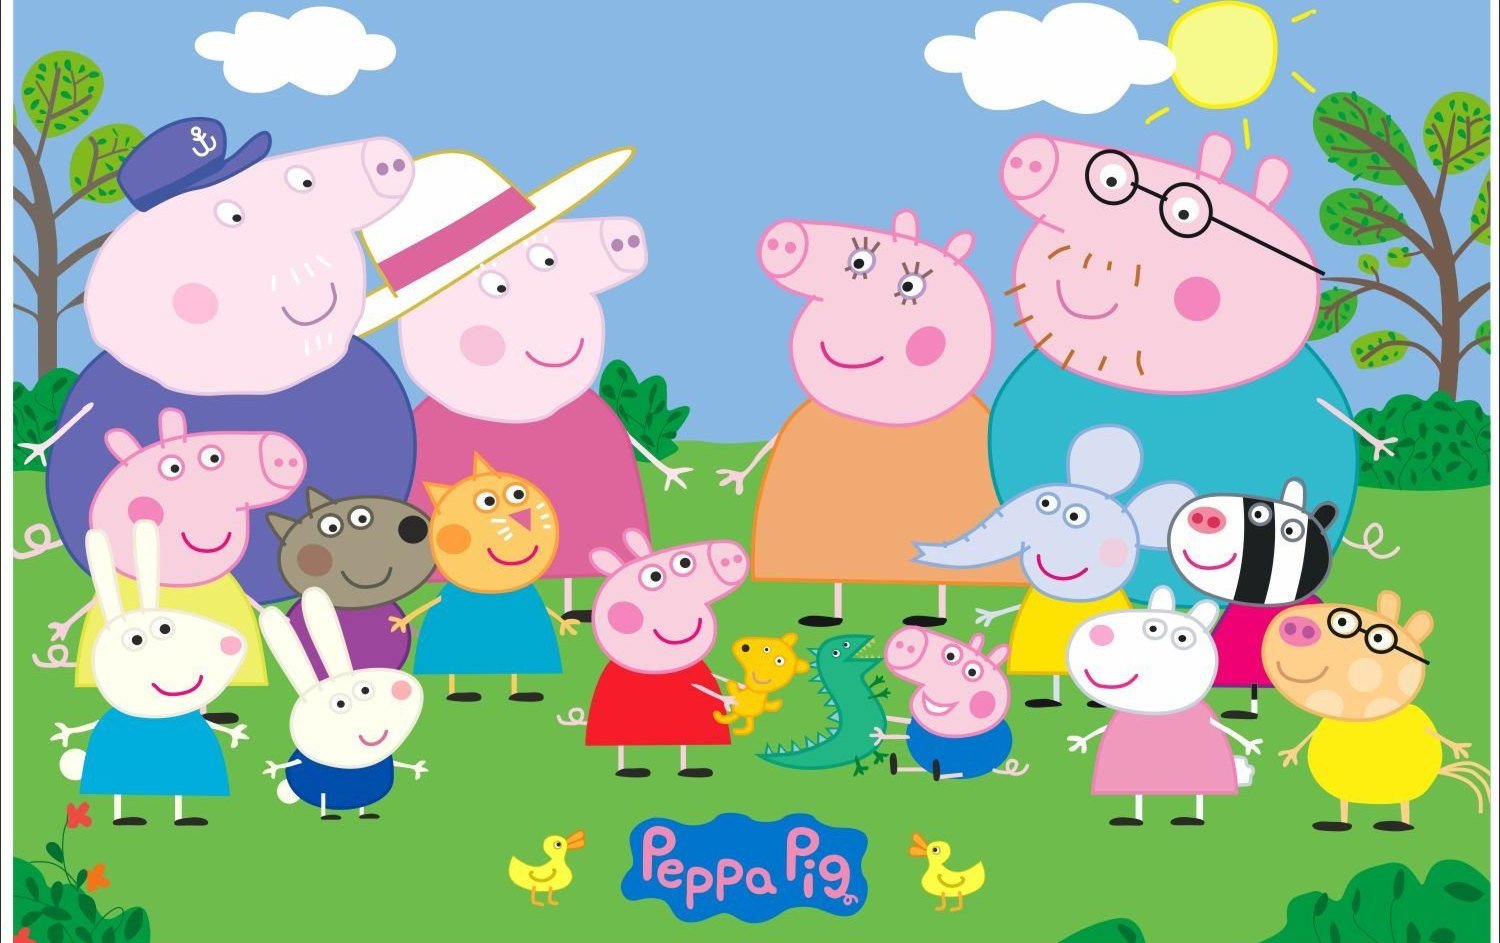 peppa pig wallpaper house || peppa pig wallpaper || peppa pig wallpaper house || Newssow.com